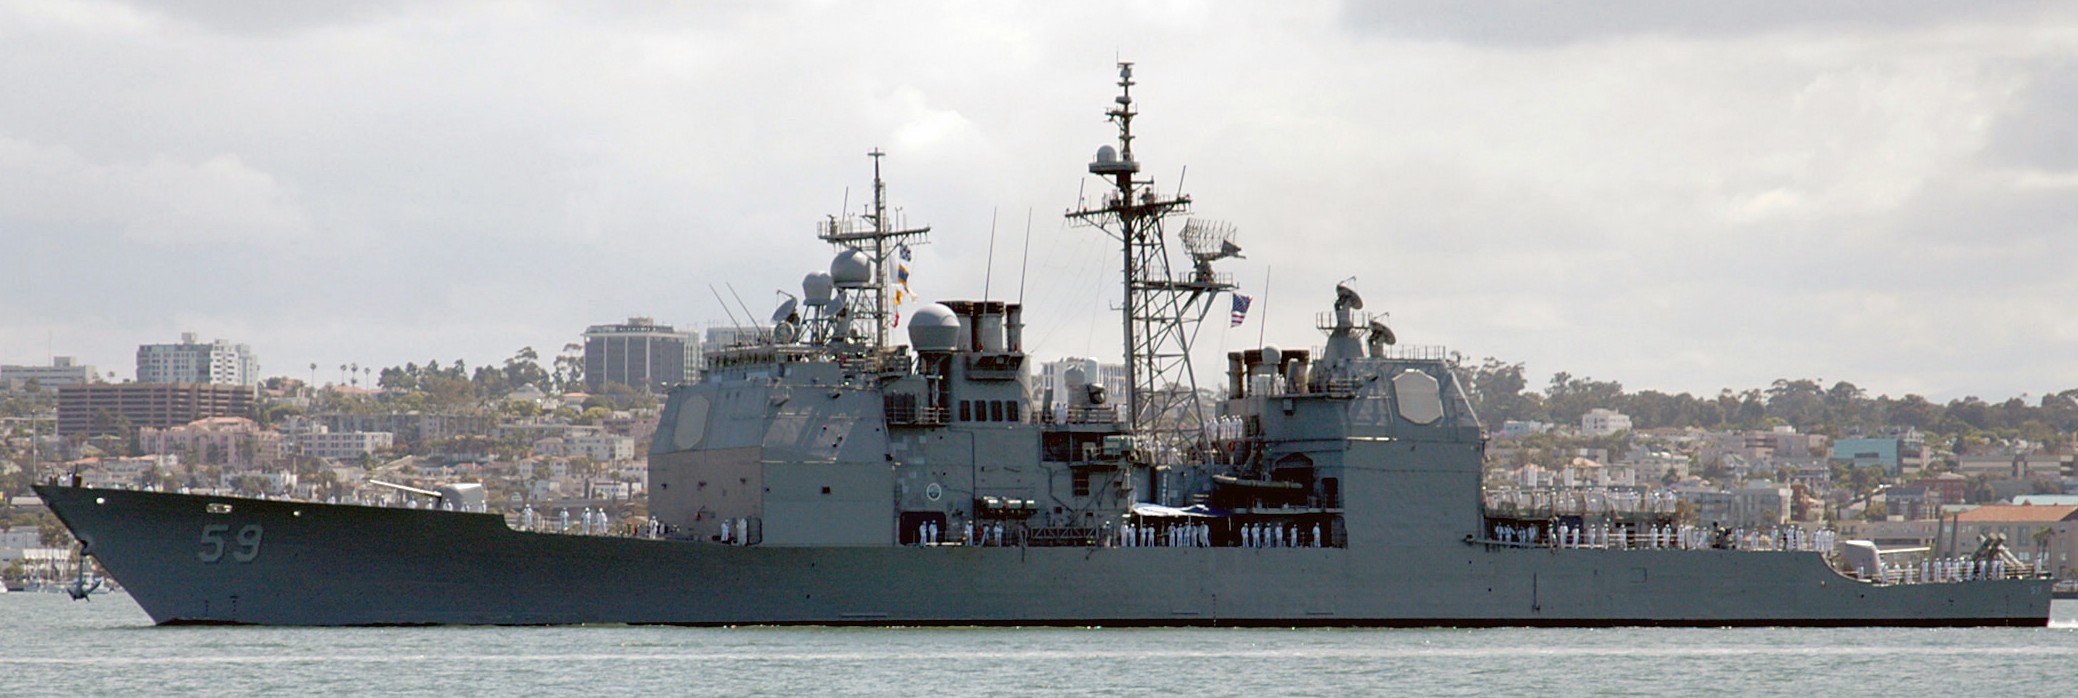 cg-59 uss princeton ticonderoga class guided missile cruiser aegis us navy 08